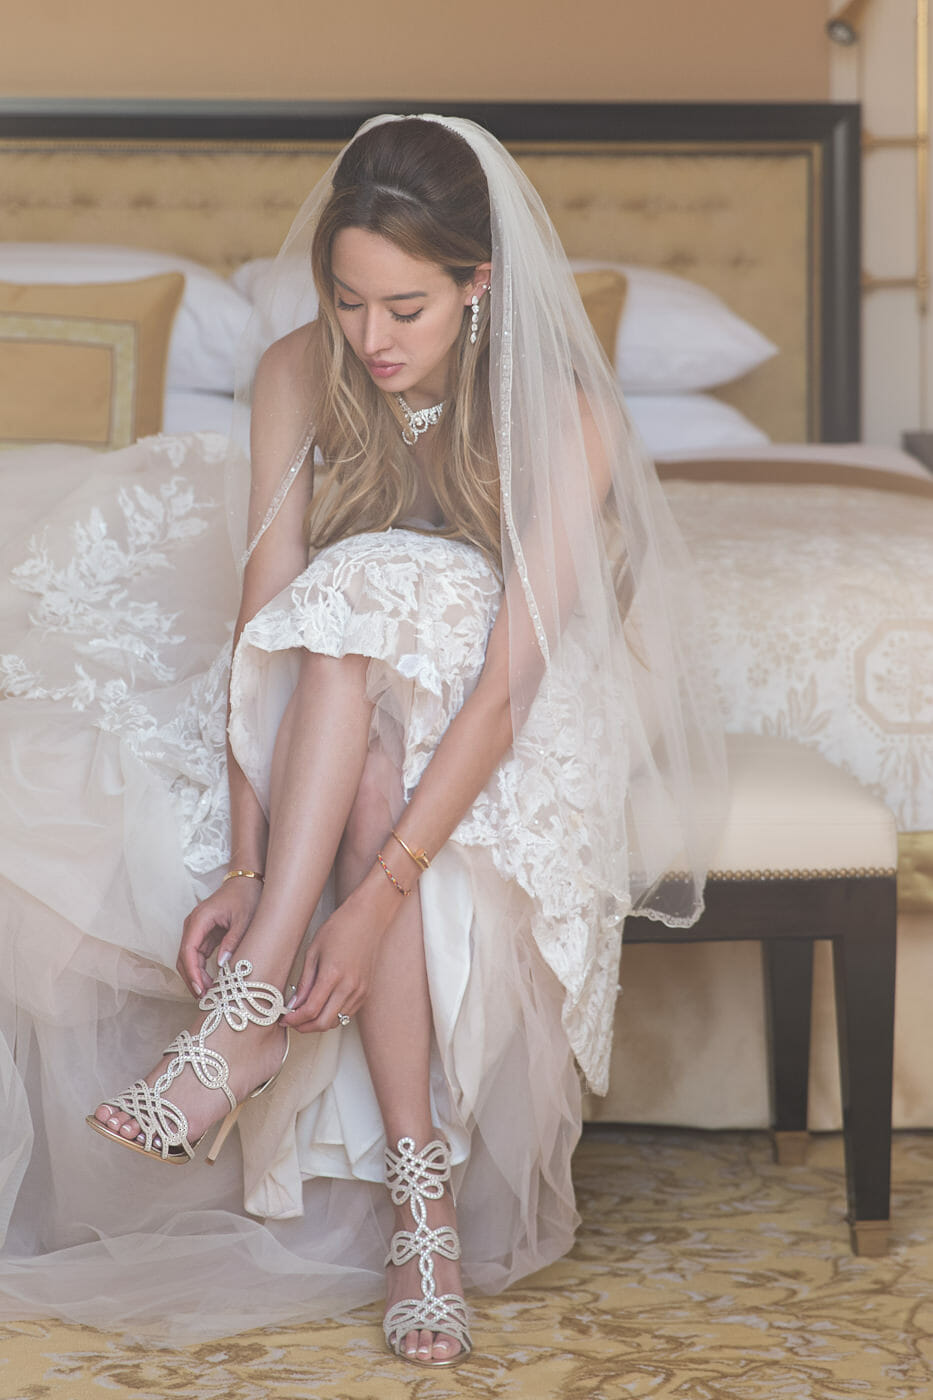 brides wearing high heels at Shangri la hotel rooms